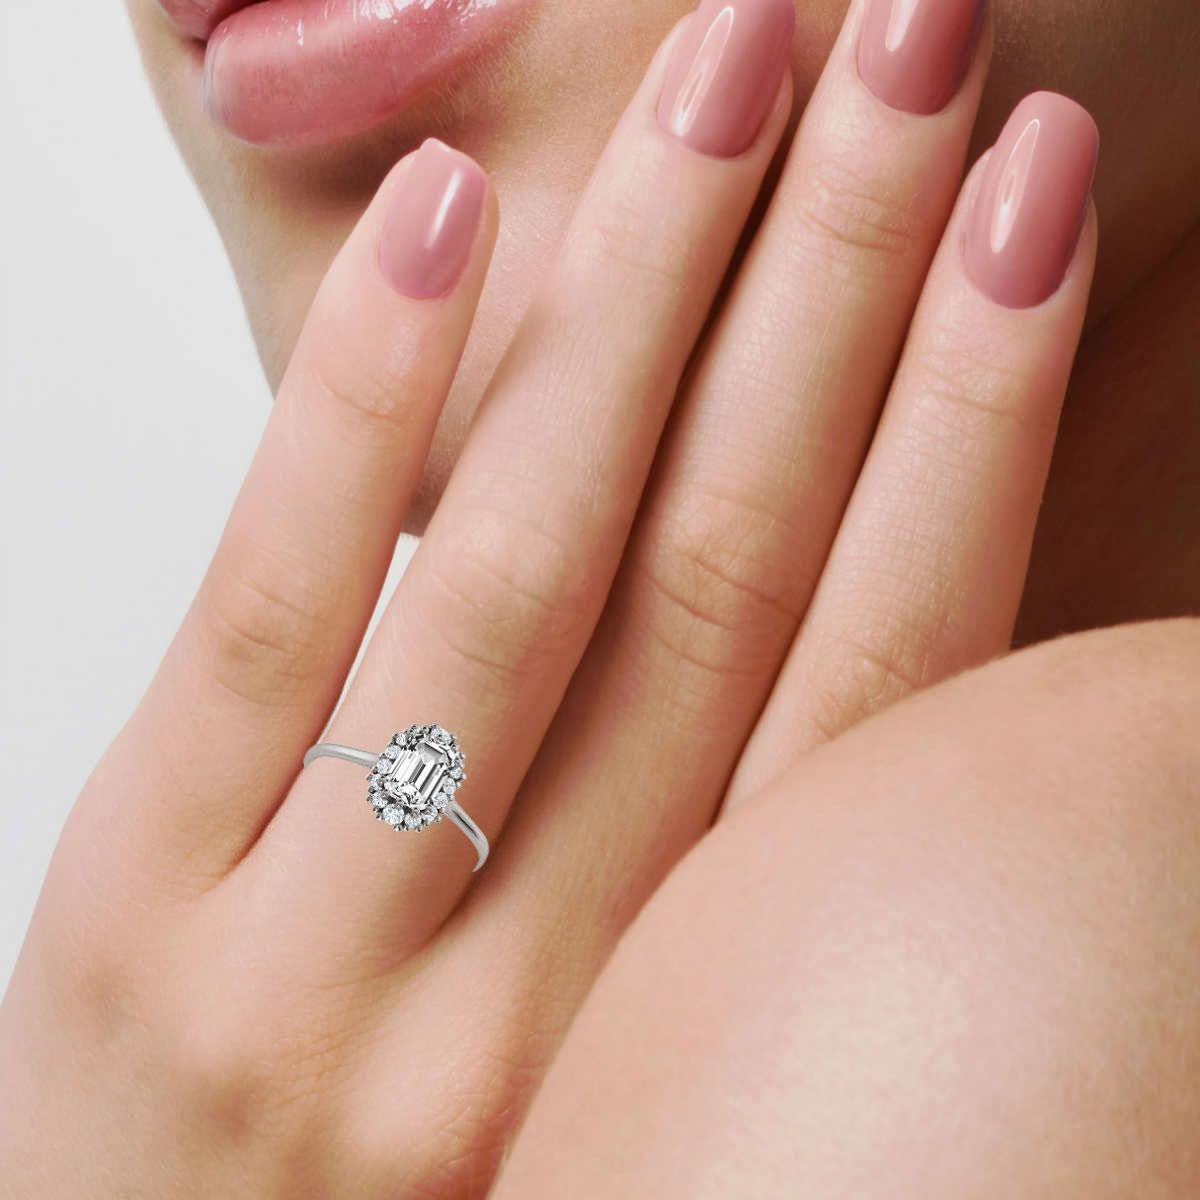 2 carat diamond ring designs